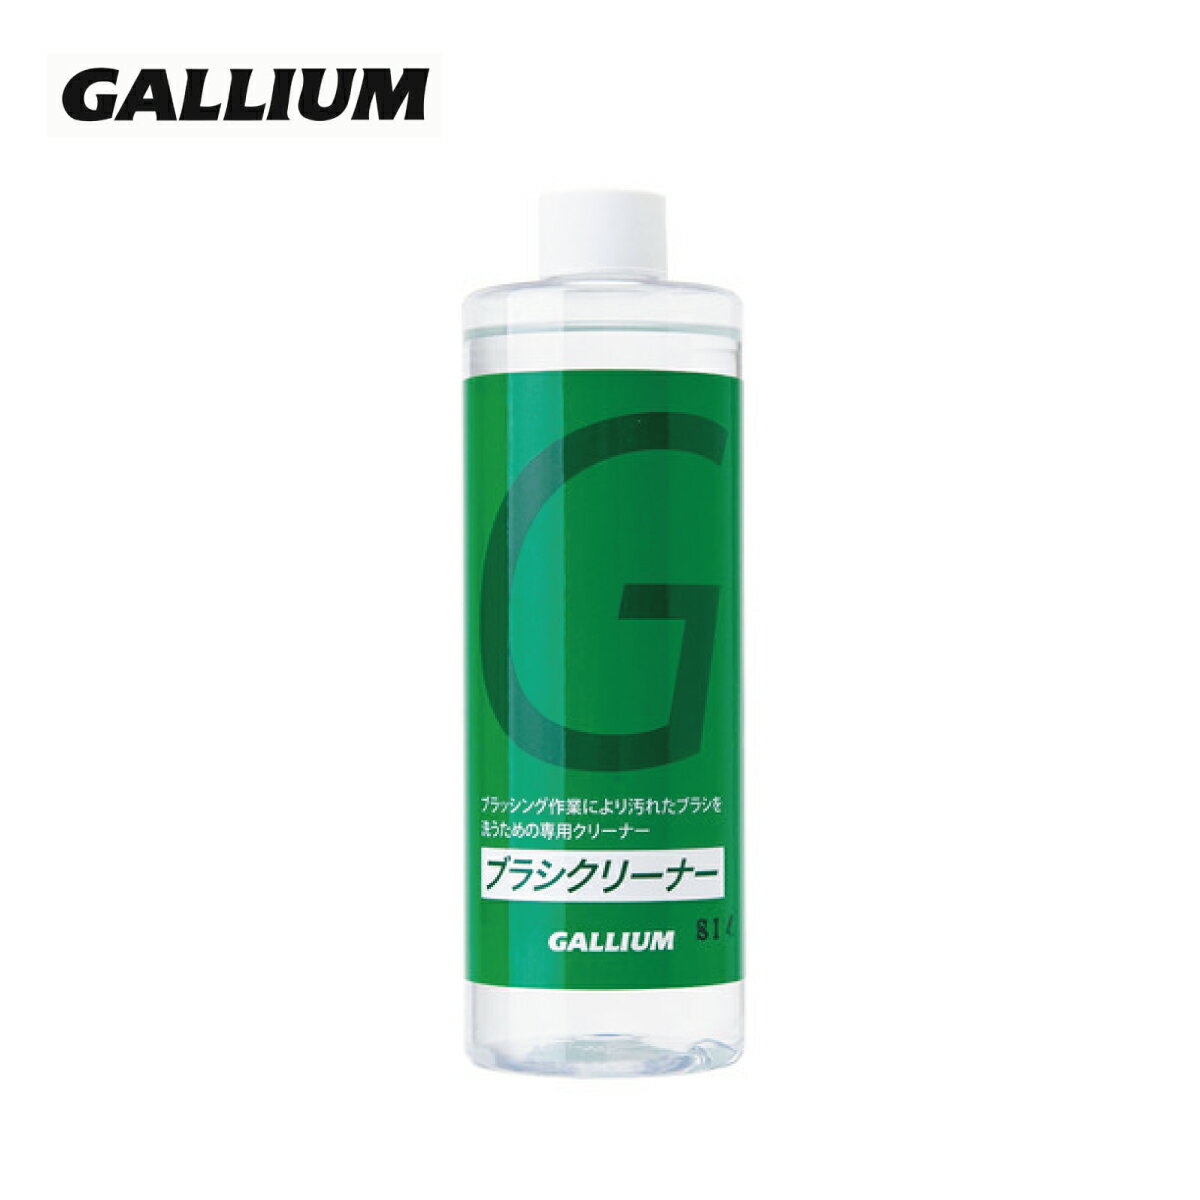 GALLIUM ガリウム チューンナップ用品